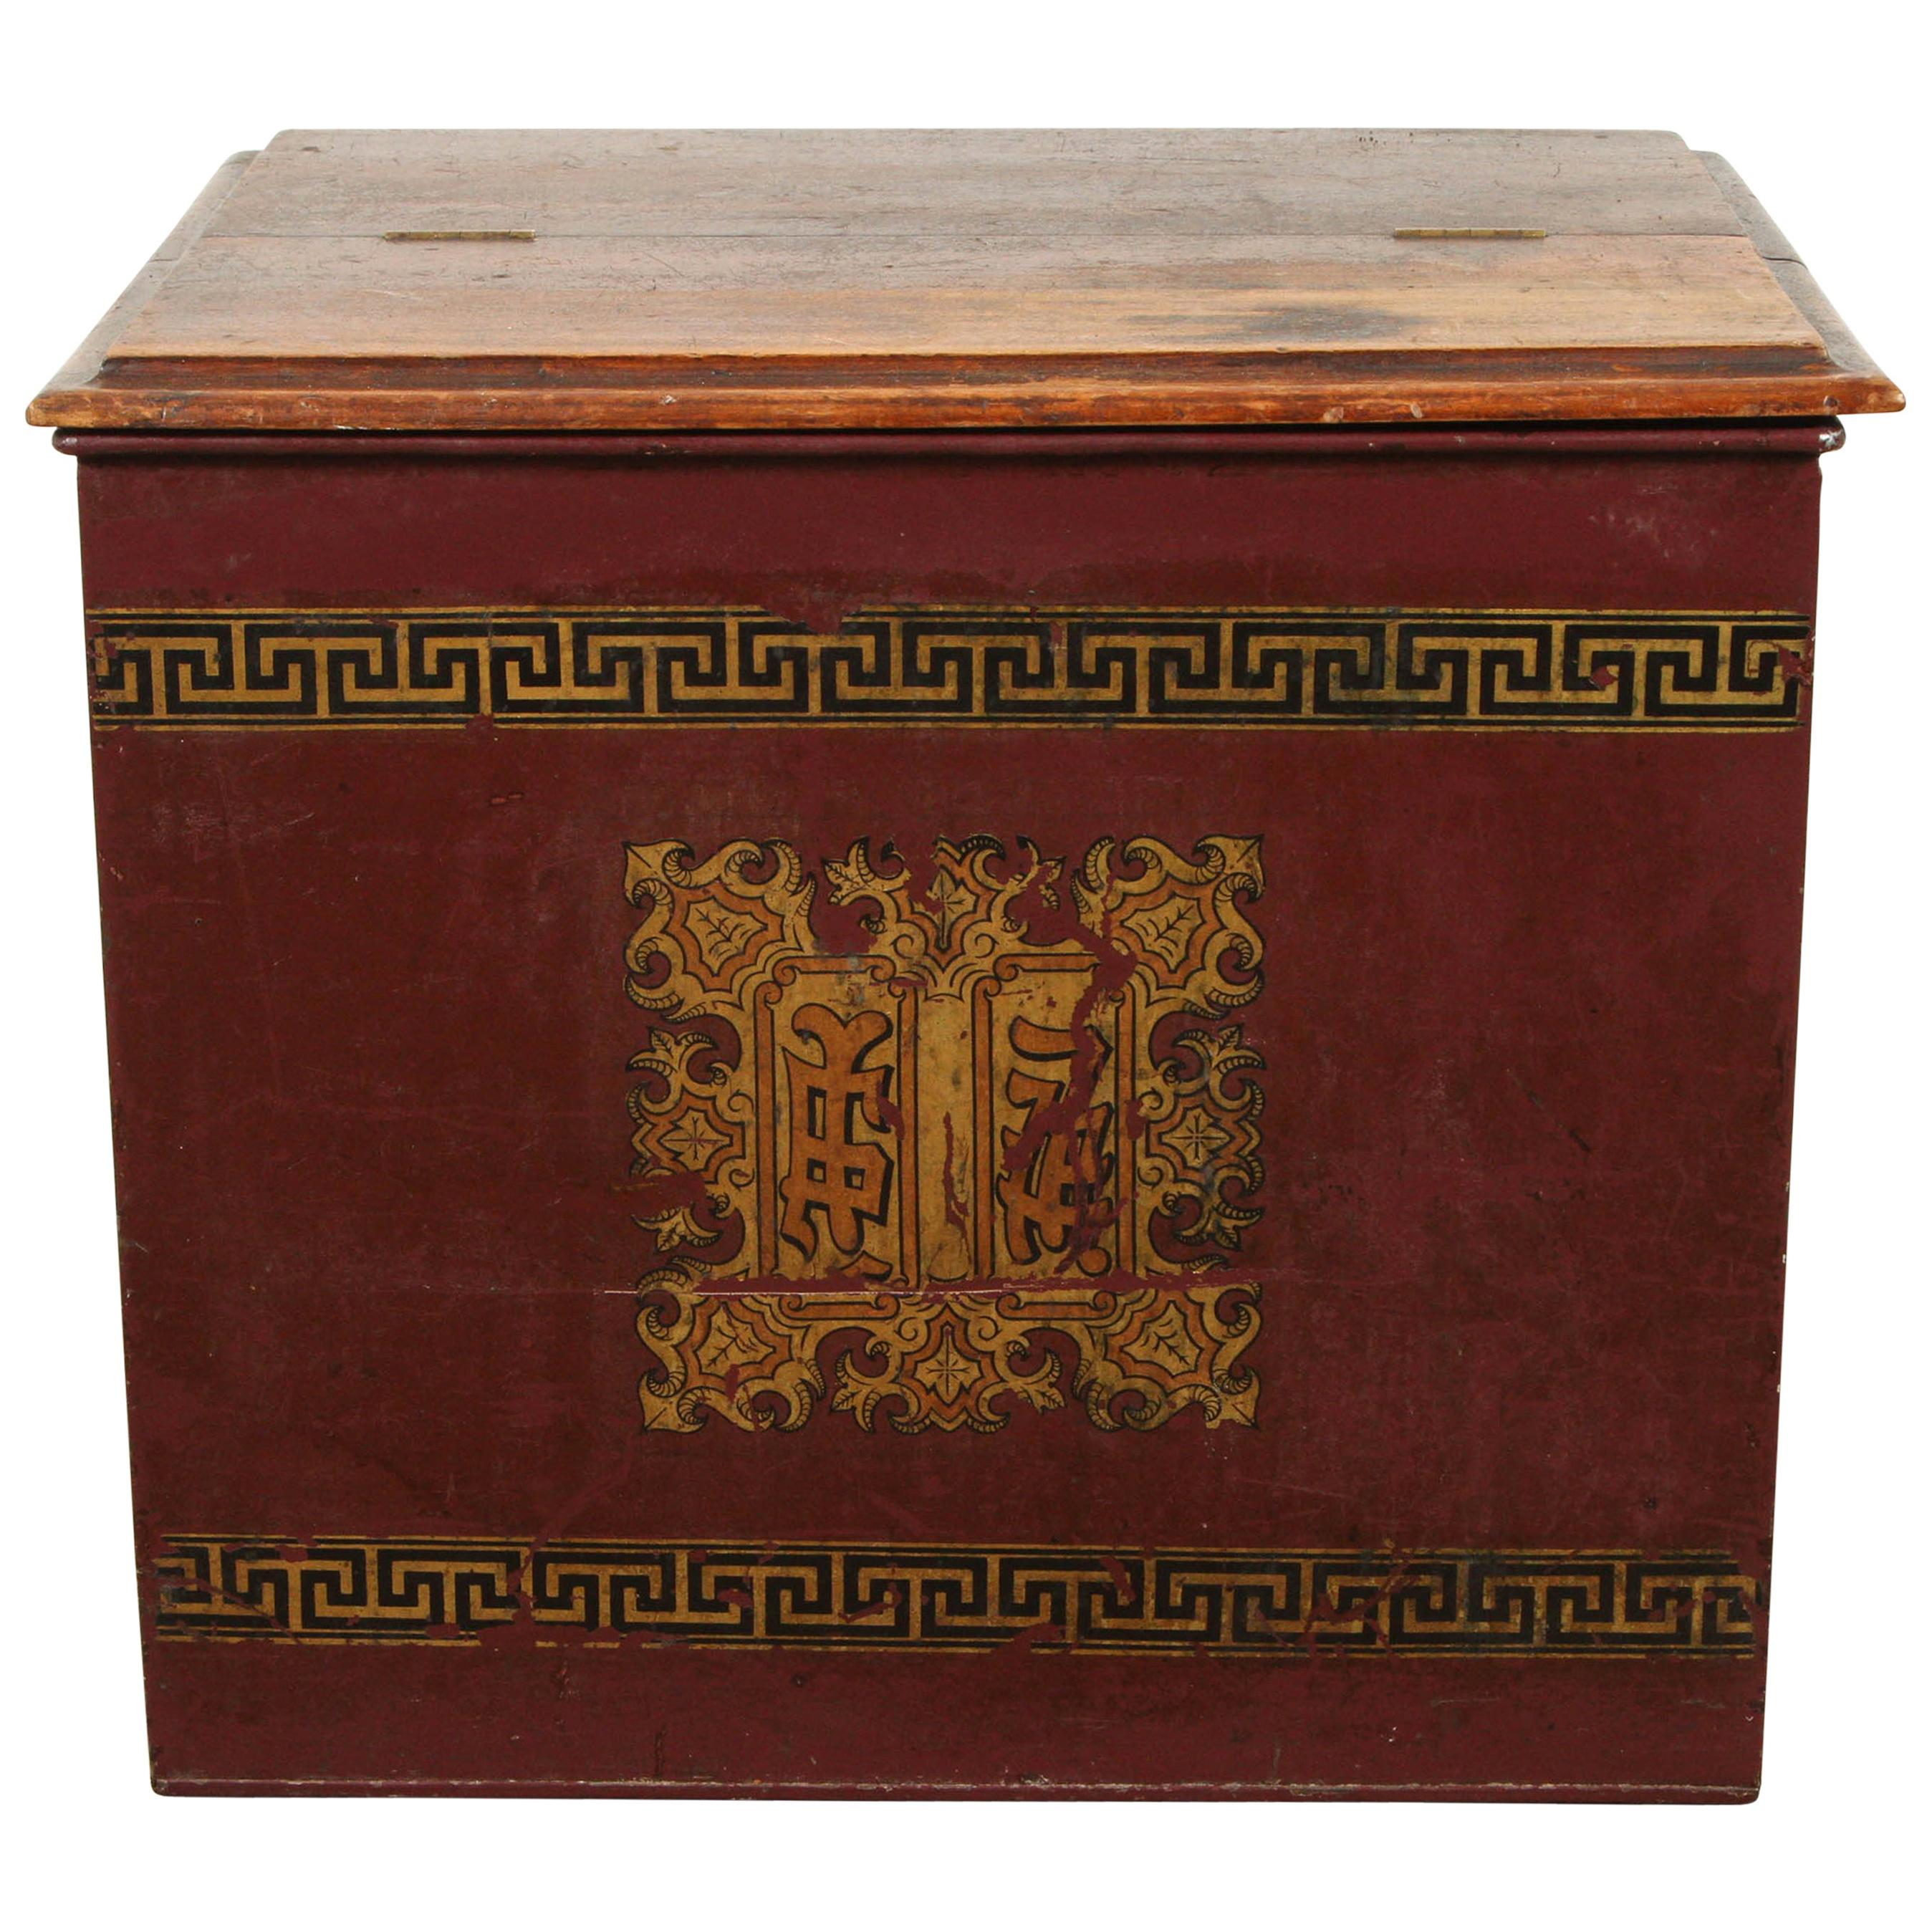 Late 19th Century English Tin and Wood Storage Box